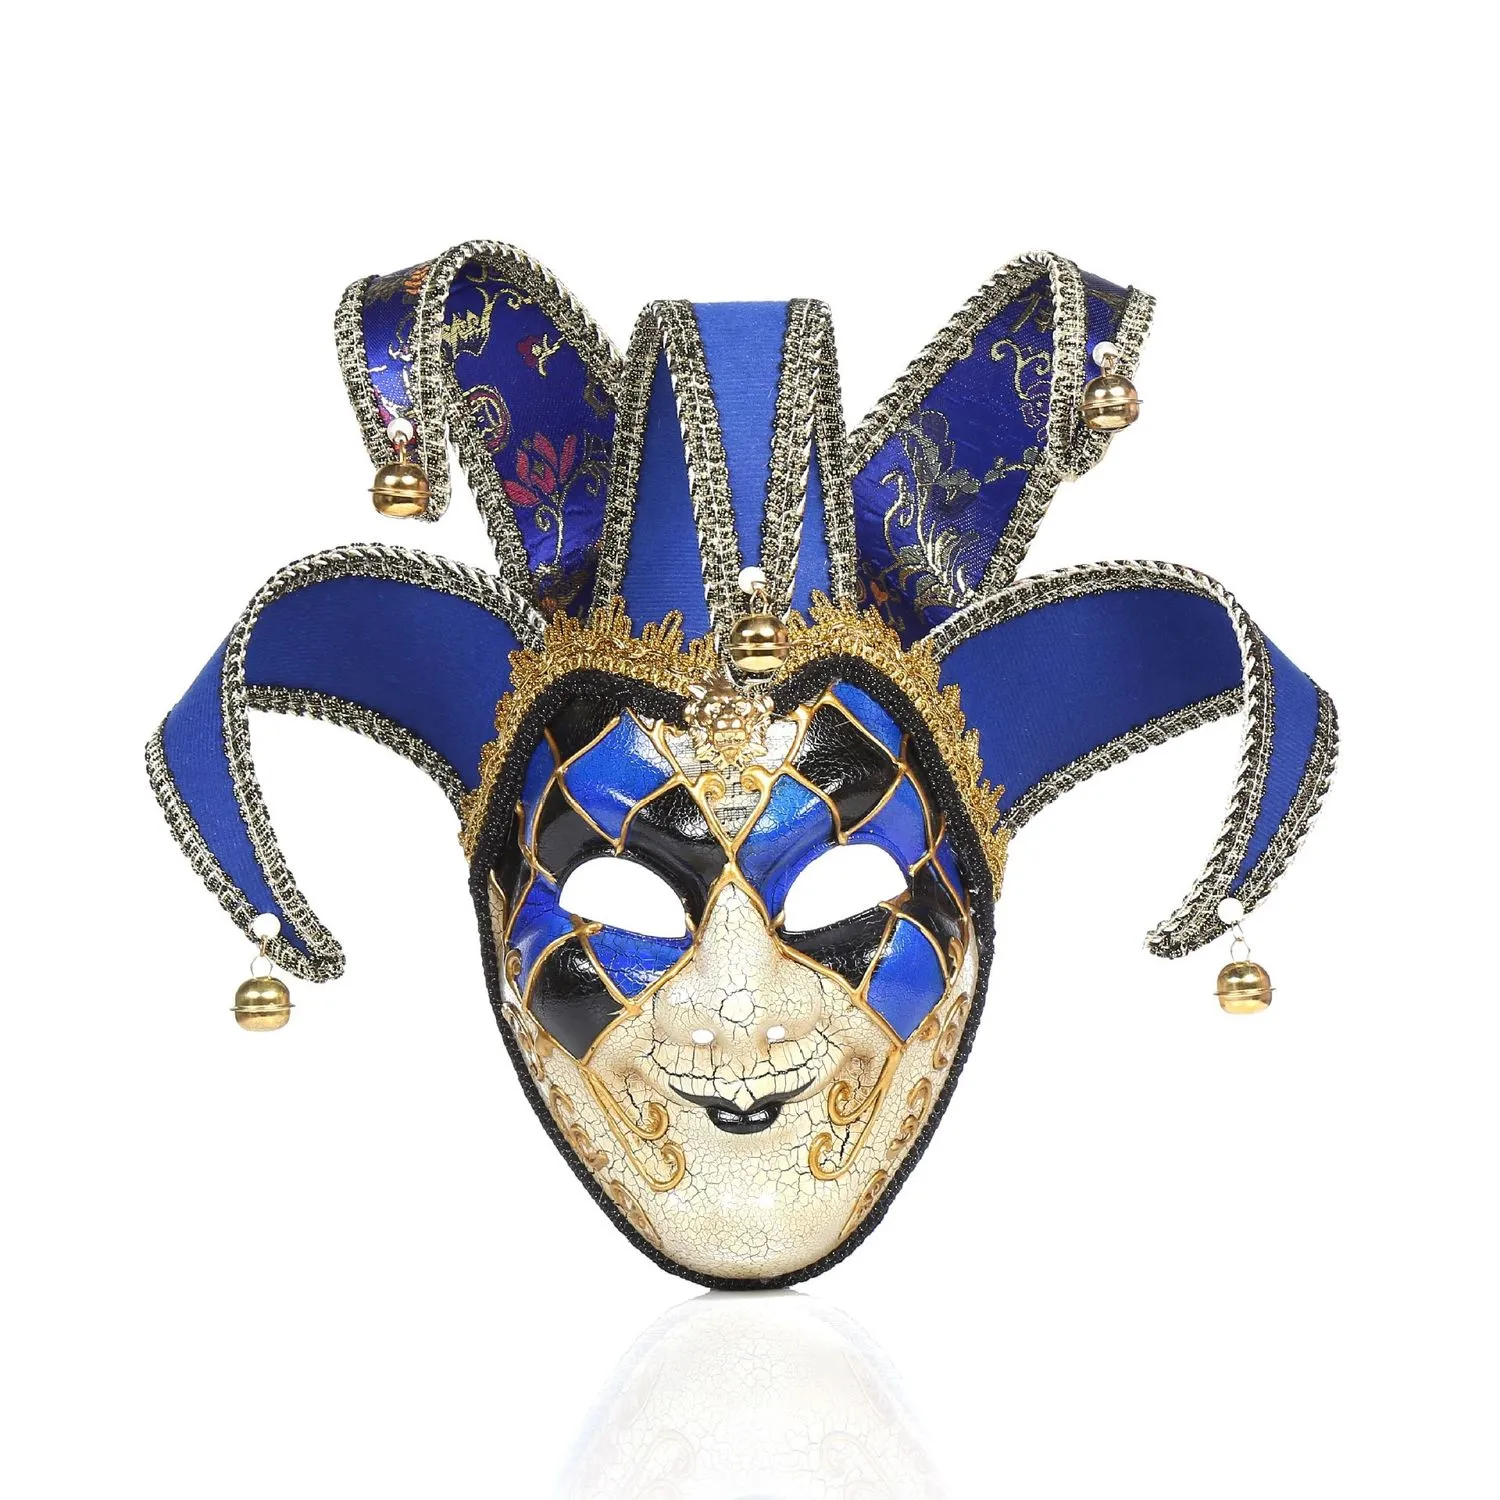 Maschera da donna femminile maschera venezia maschere si colloca maschera maschera natale halloween costumi veneziani carnival maschere anonime t2001165587477